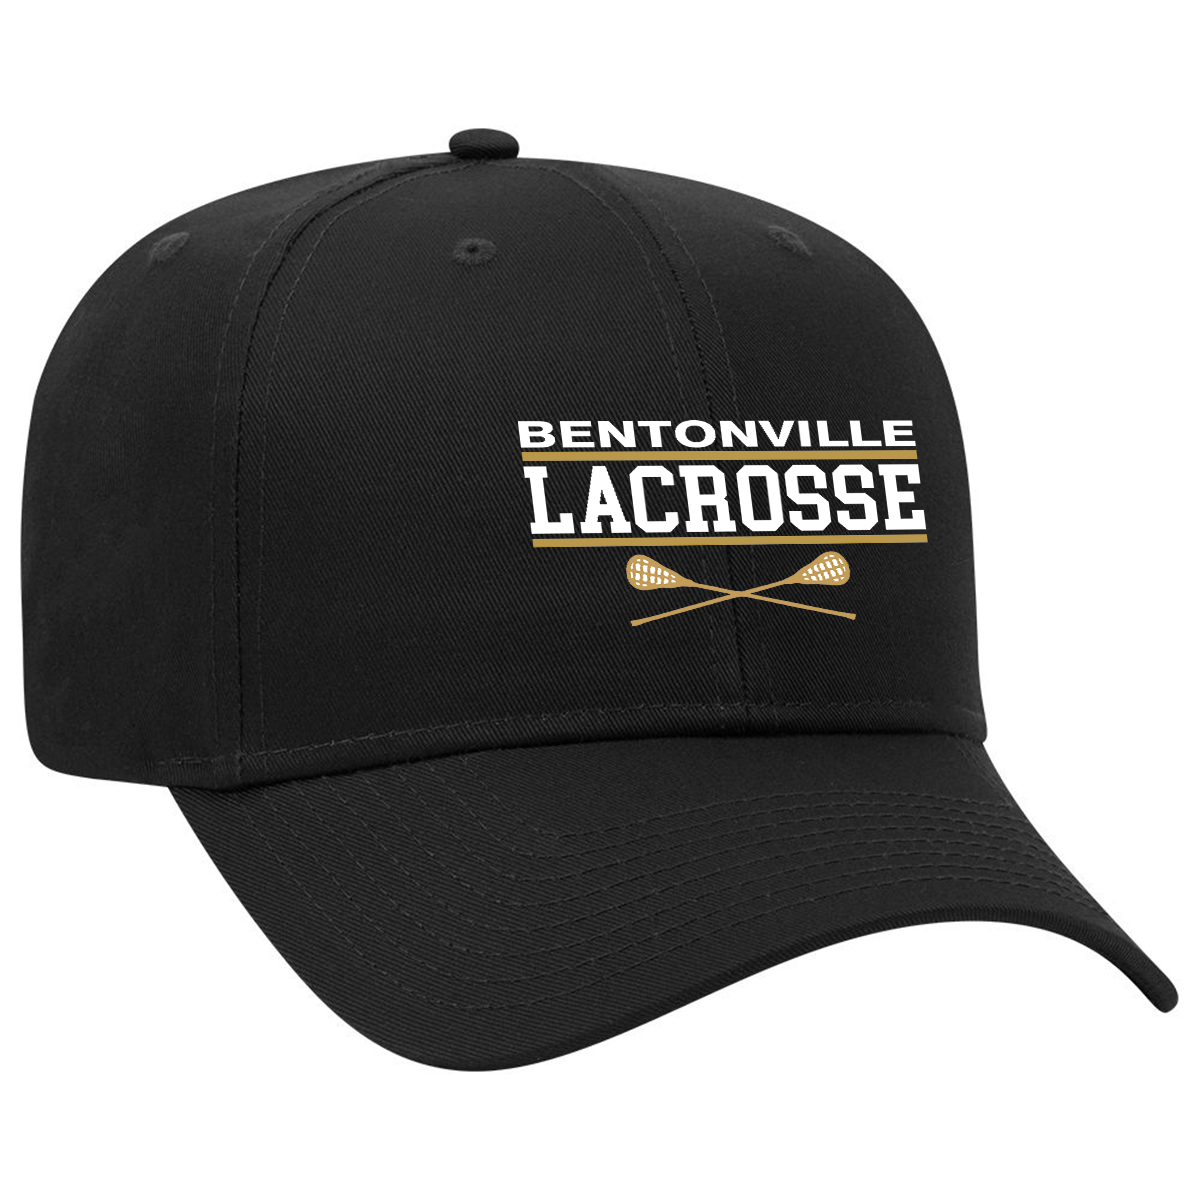 Bentonville Lacrosse Cap